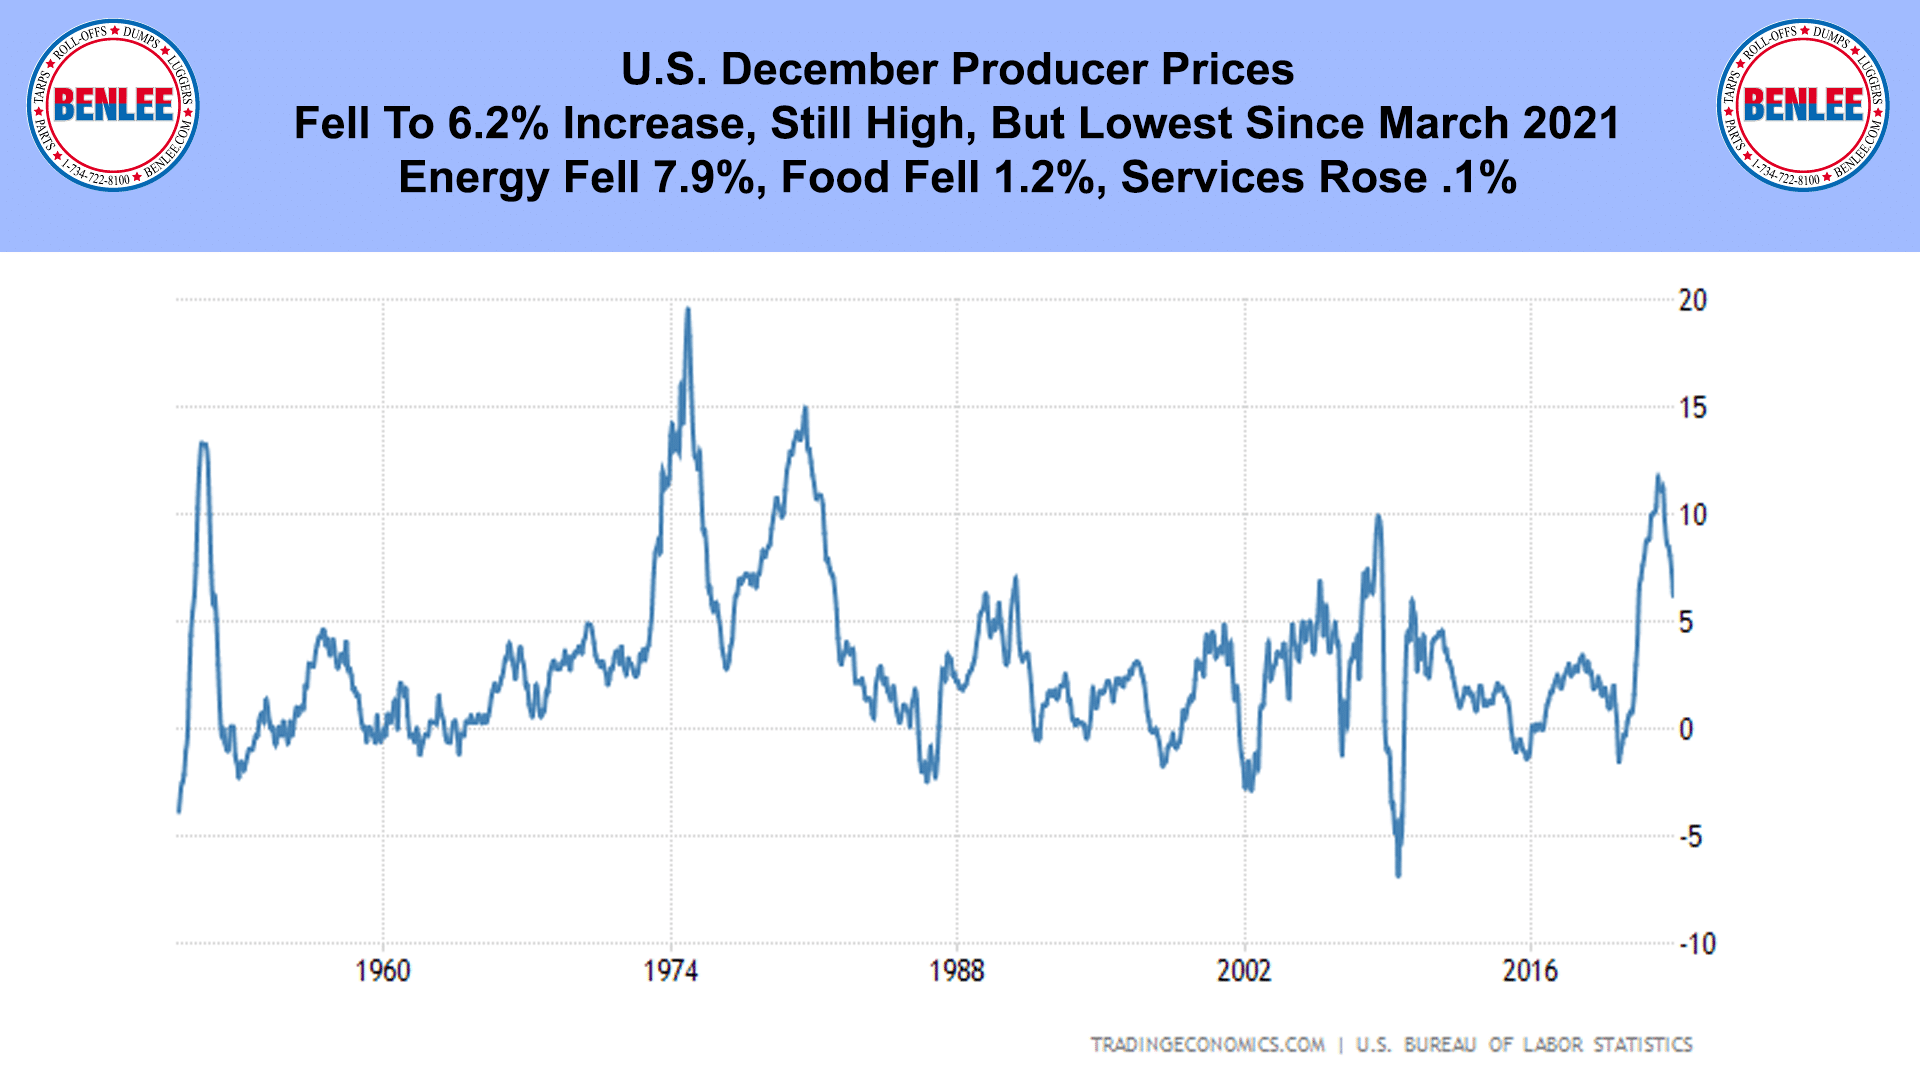 U.S. December Producer Prices